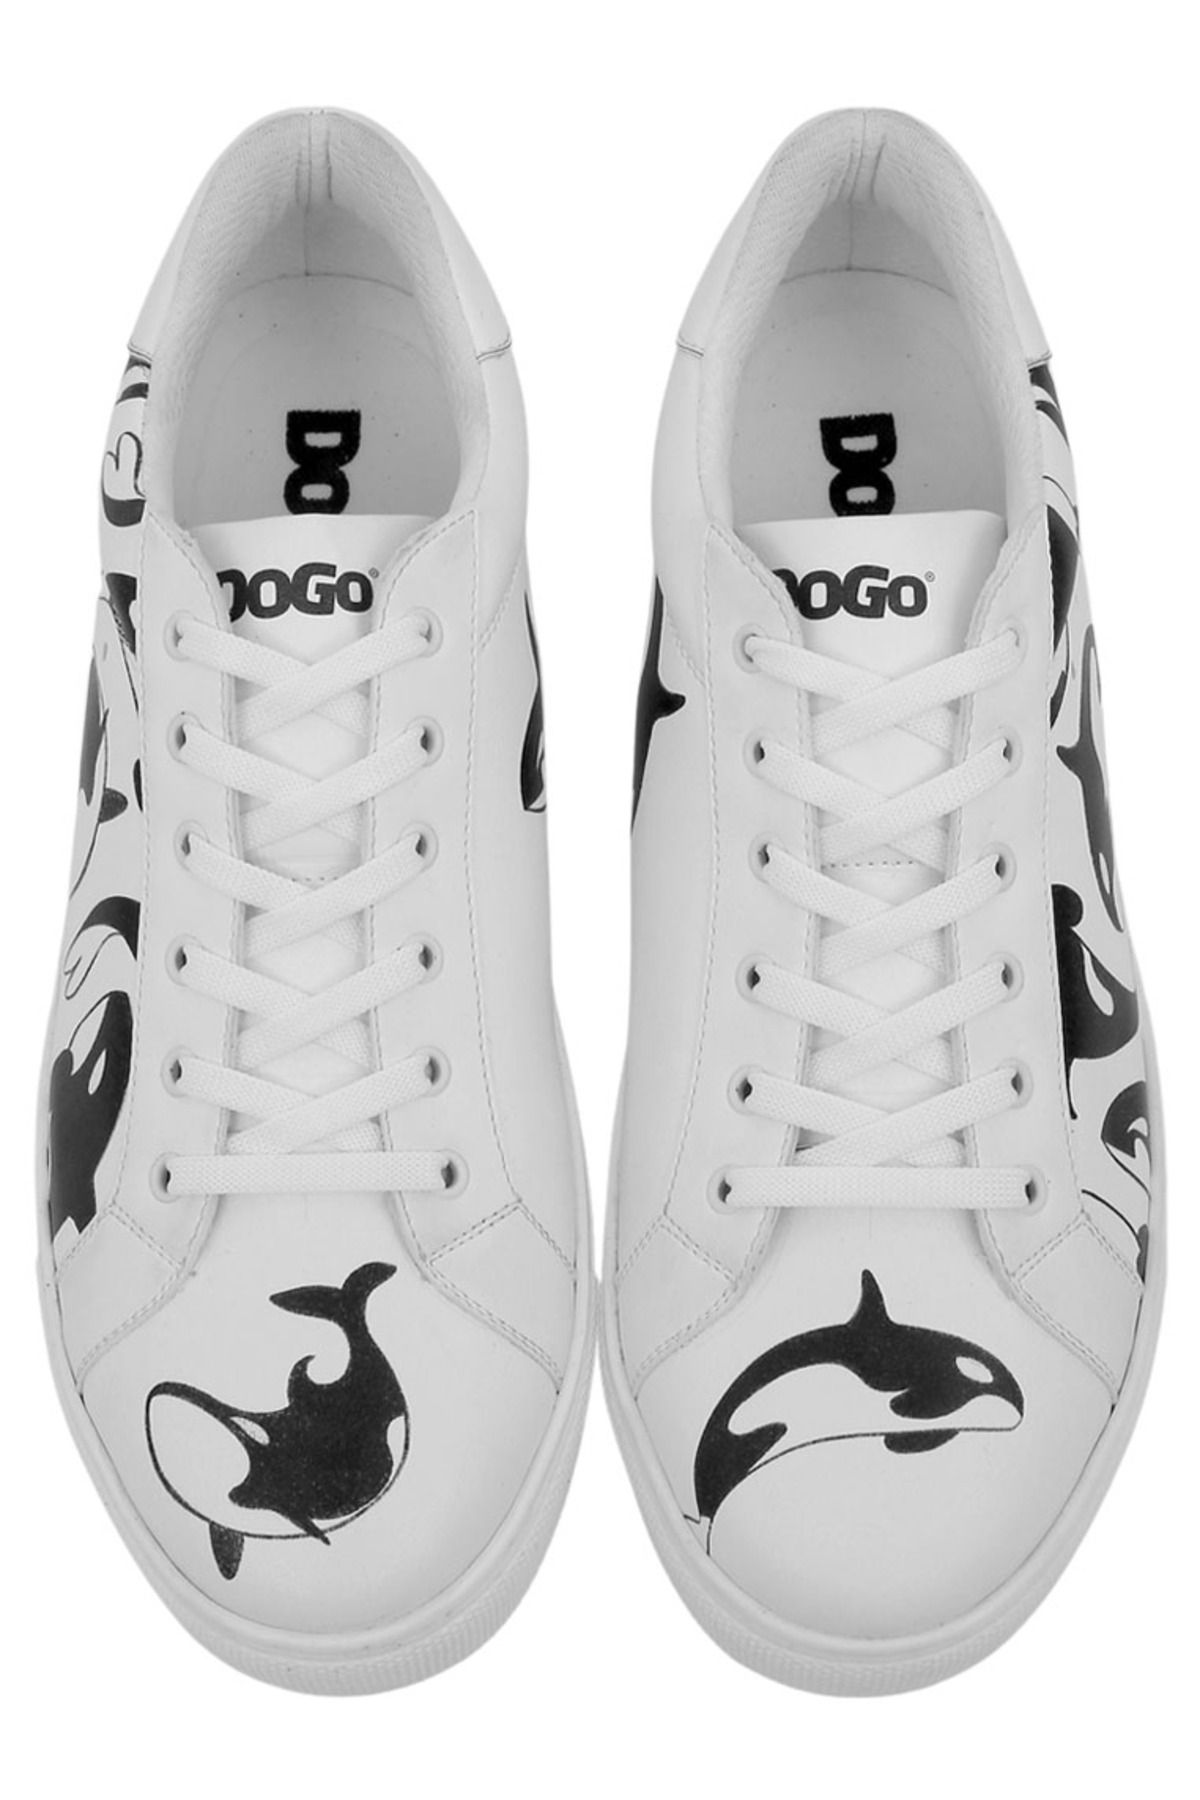 Dogo Erkek Vegan Deri Beyaz Sneakers - Flowing Orca Tasarım